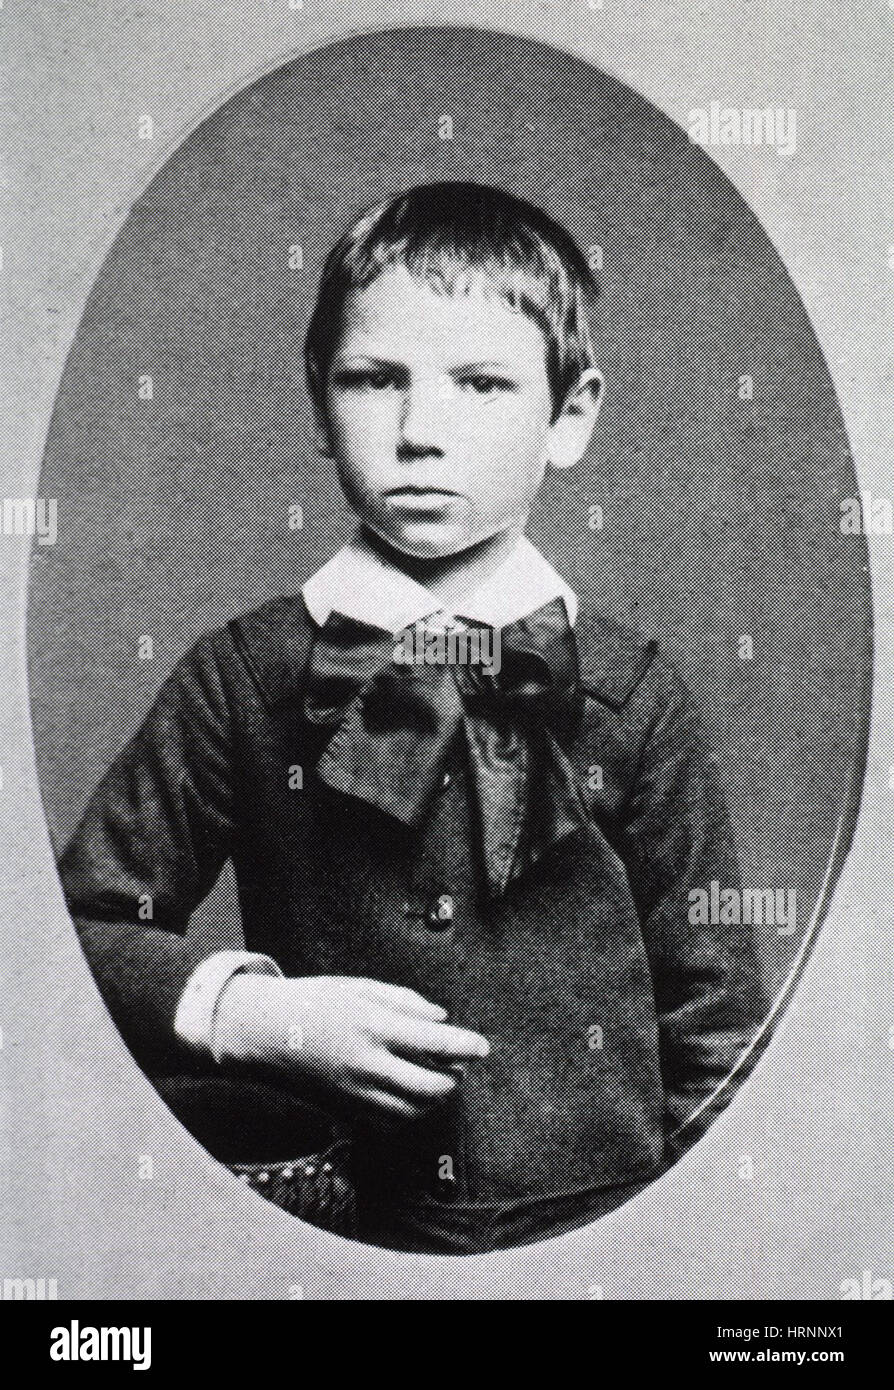 young-albert-schweitzer-1882-HRNNX1.jpg